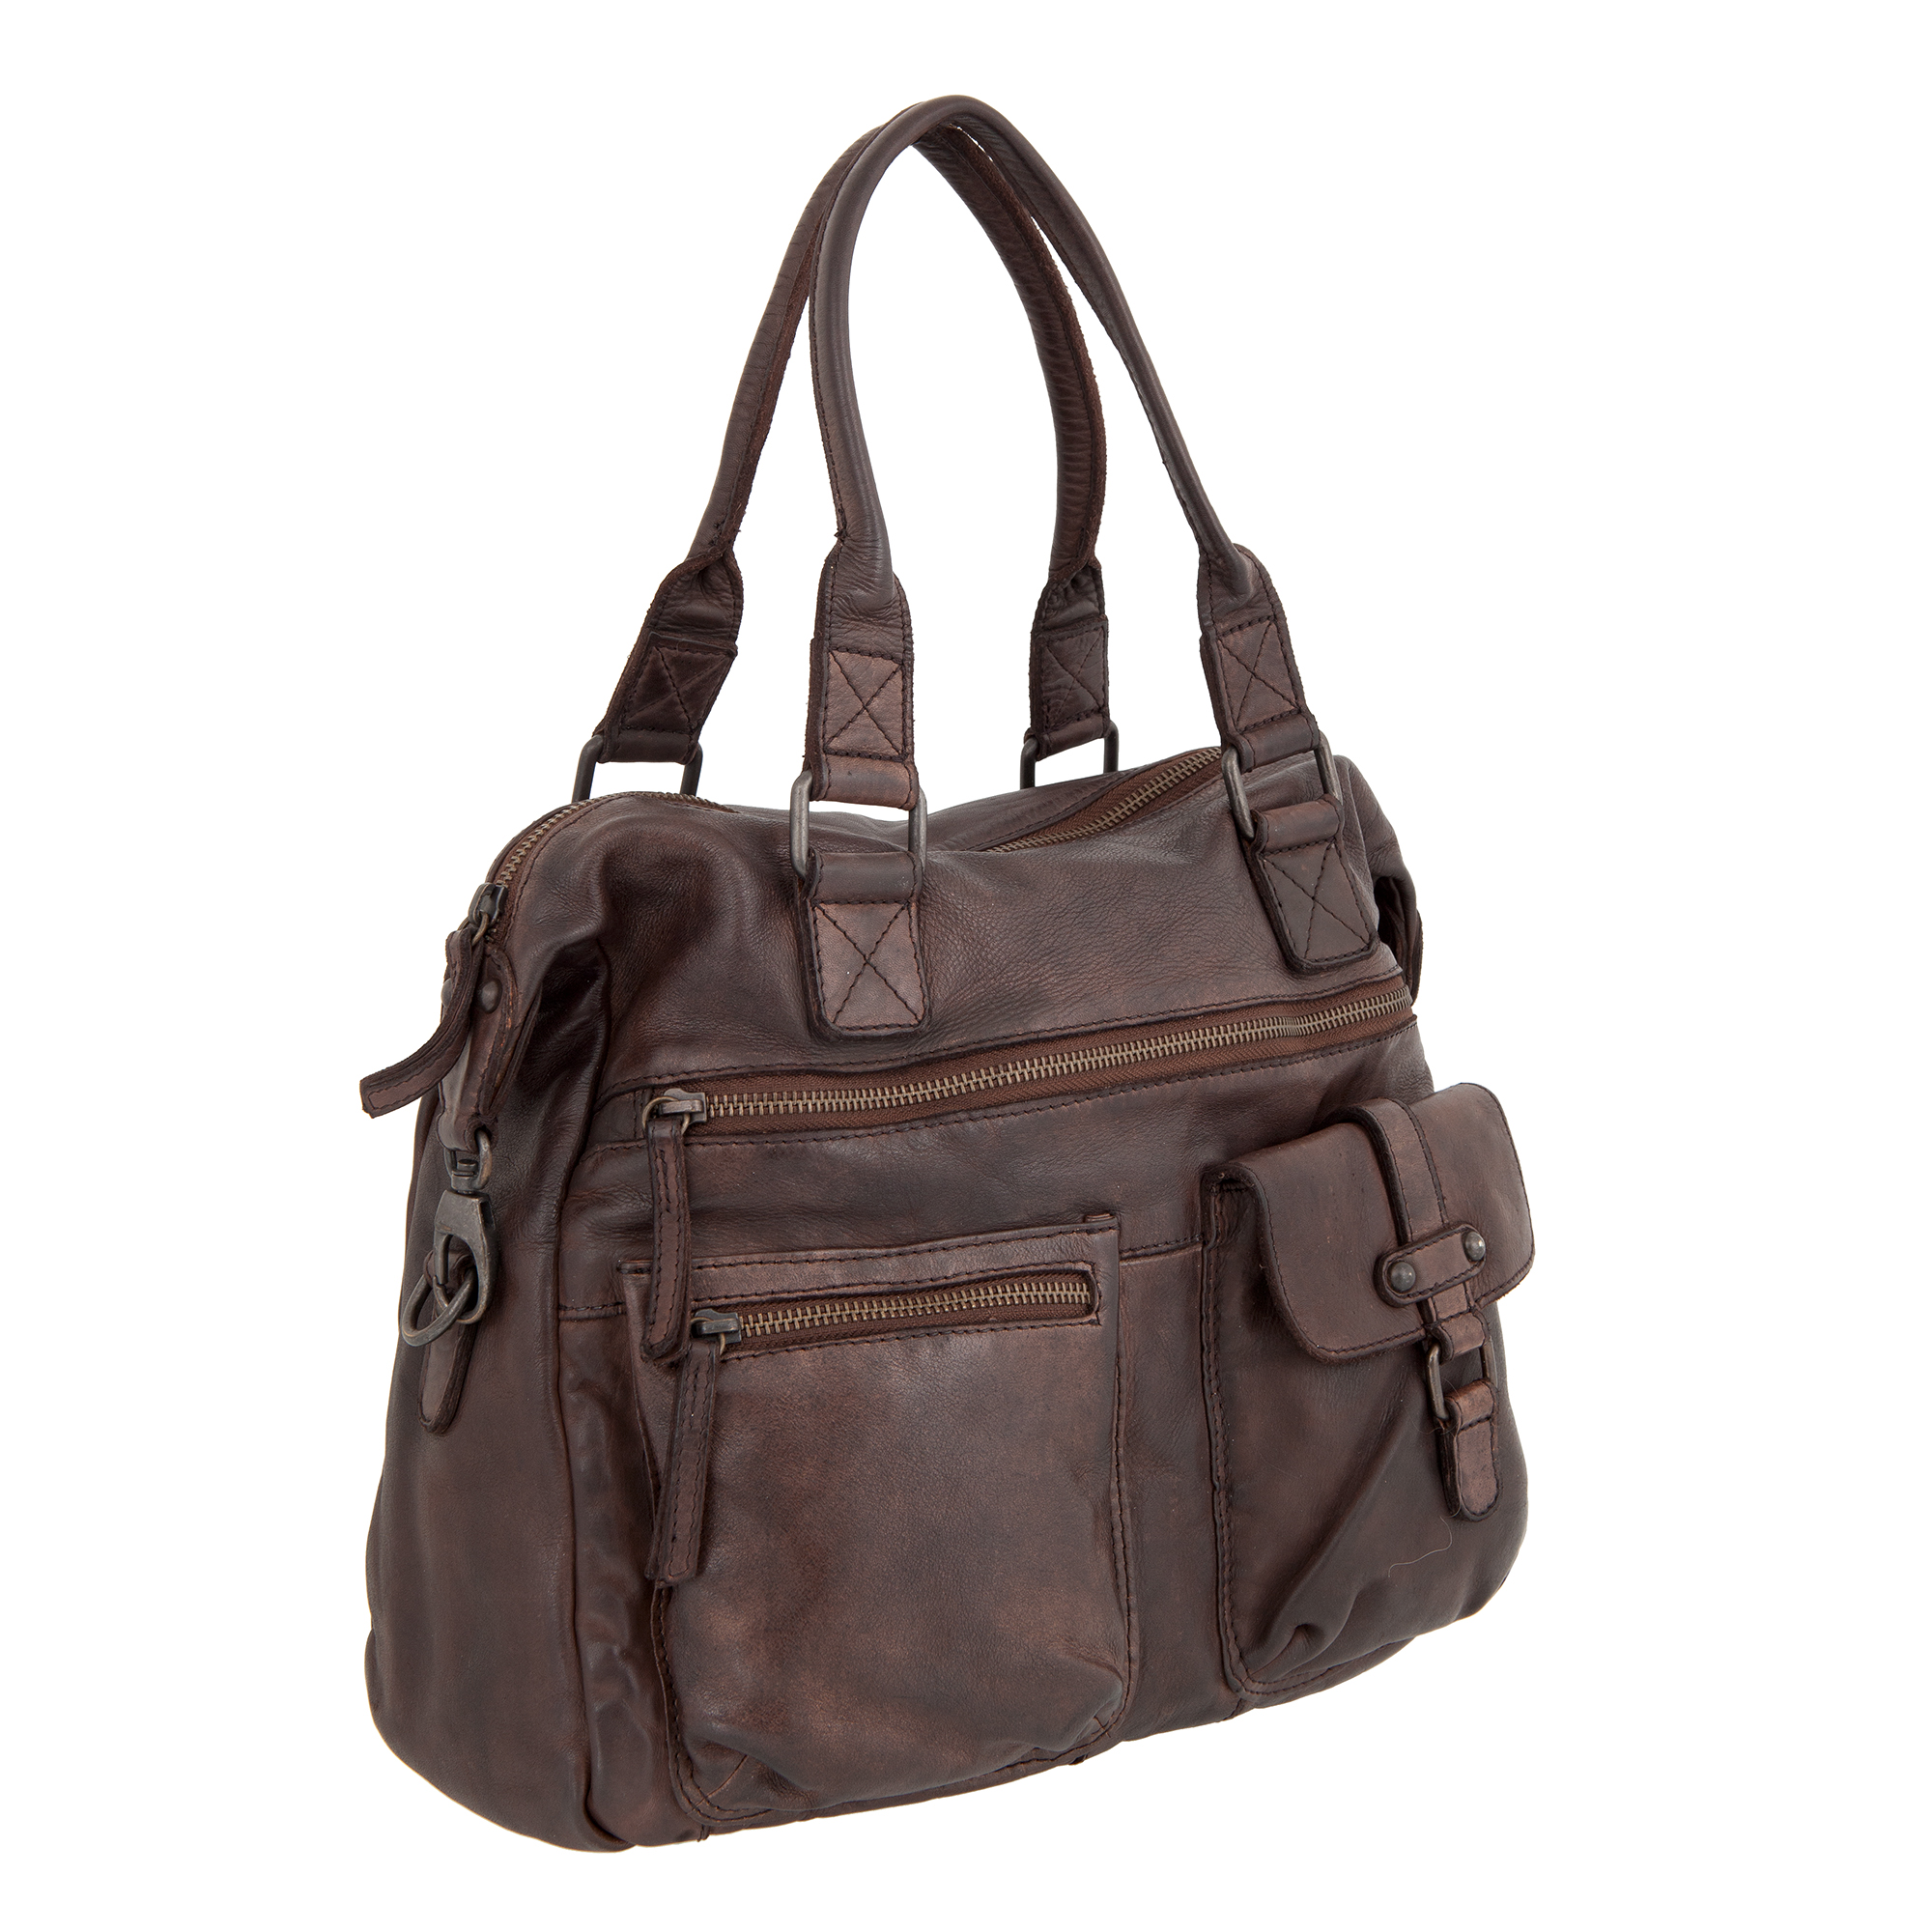 Женская сумка
Gianni Conti
4203397 brown Сумки